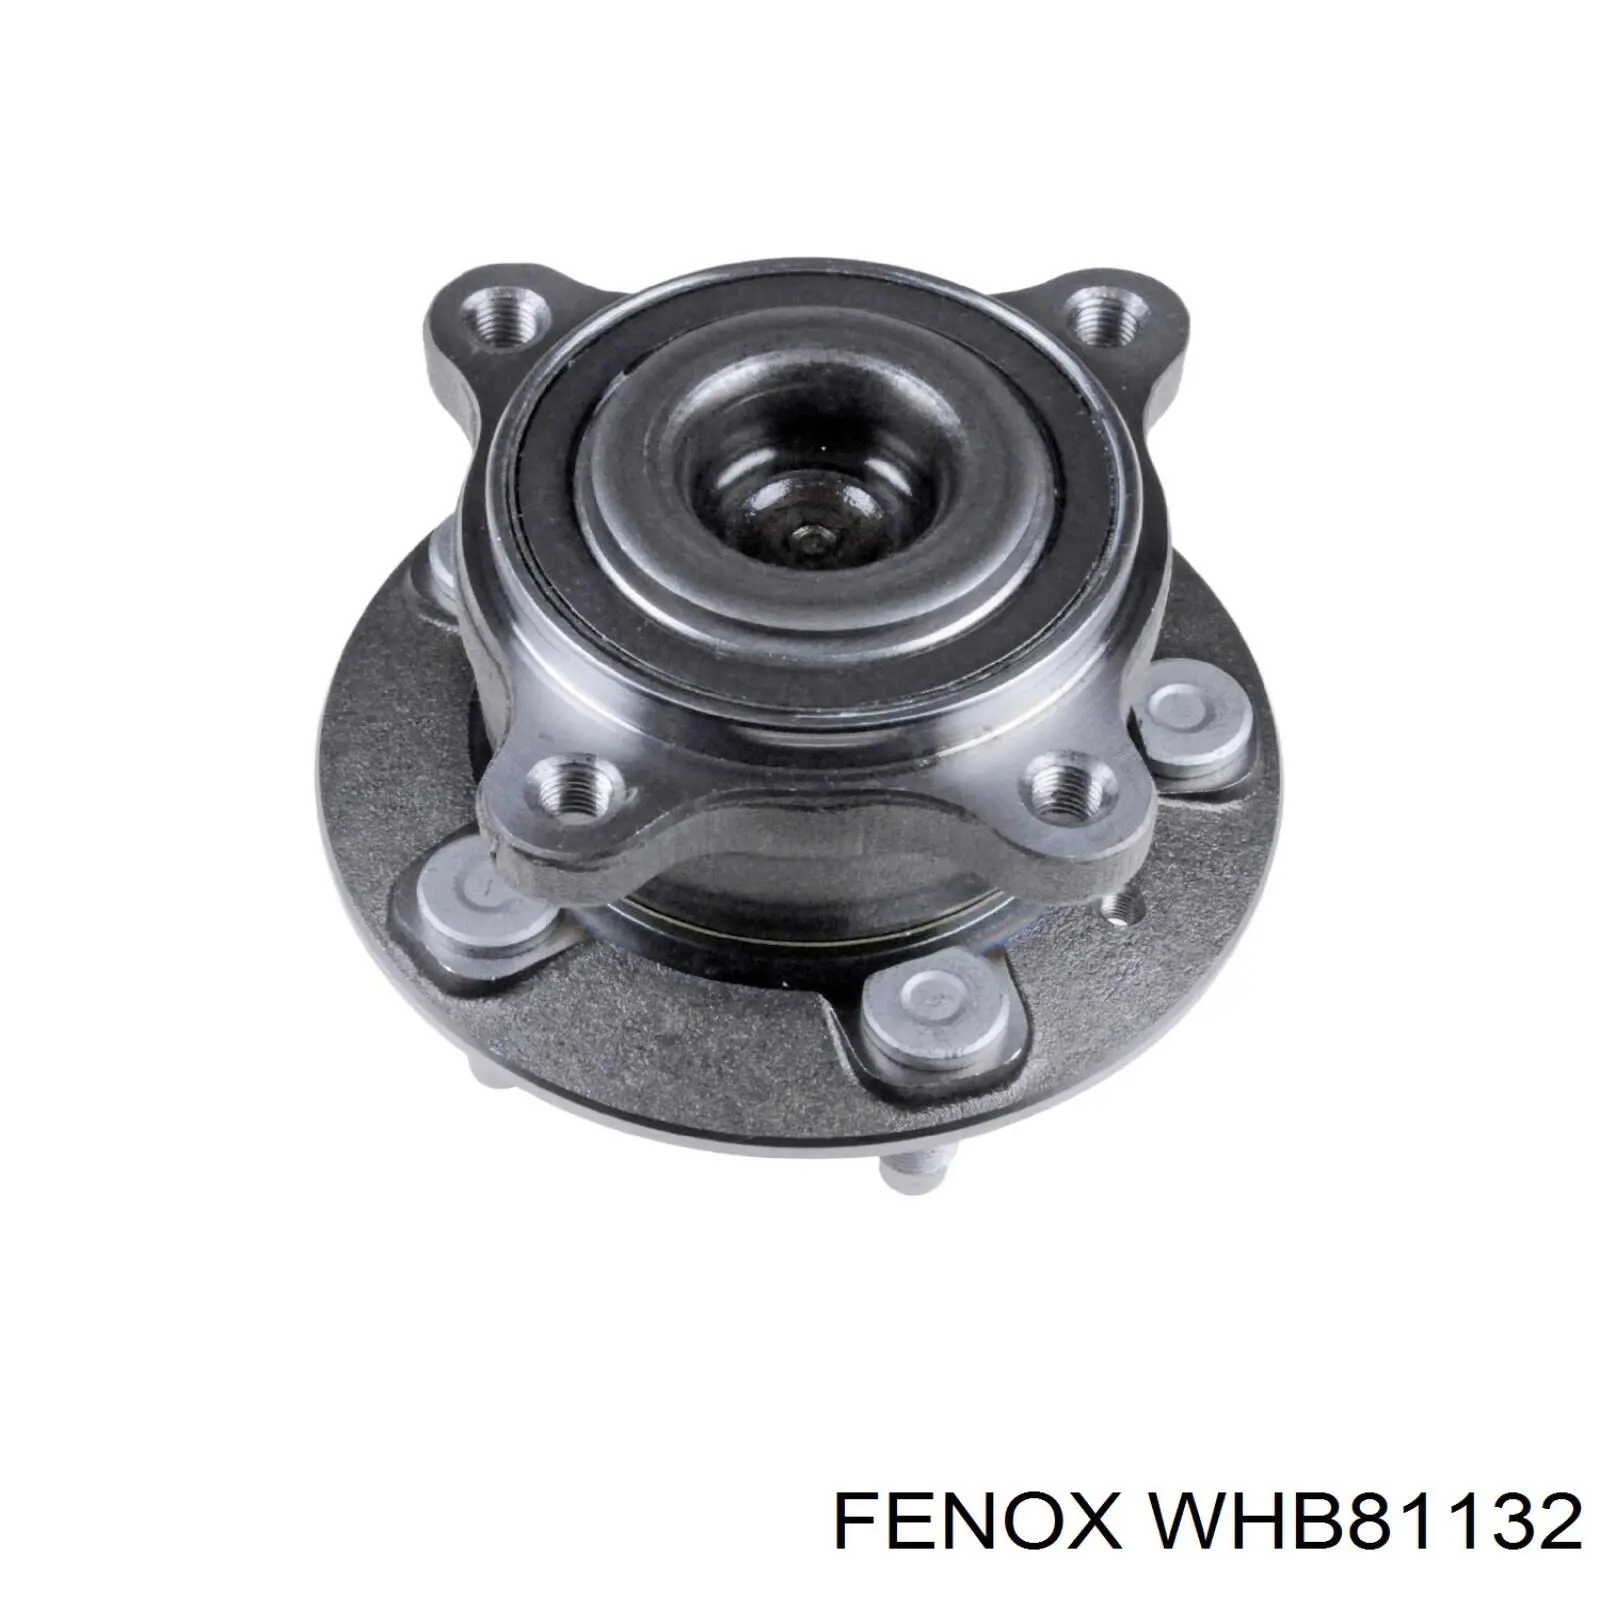 WHB81132 Fenox ступица задняя